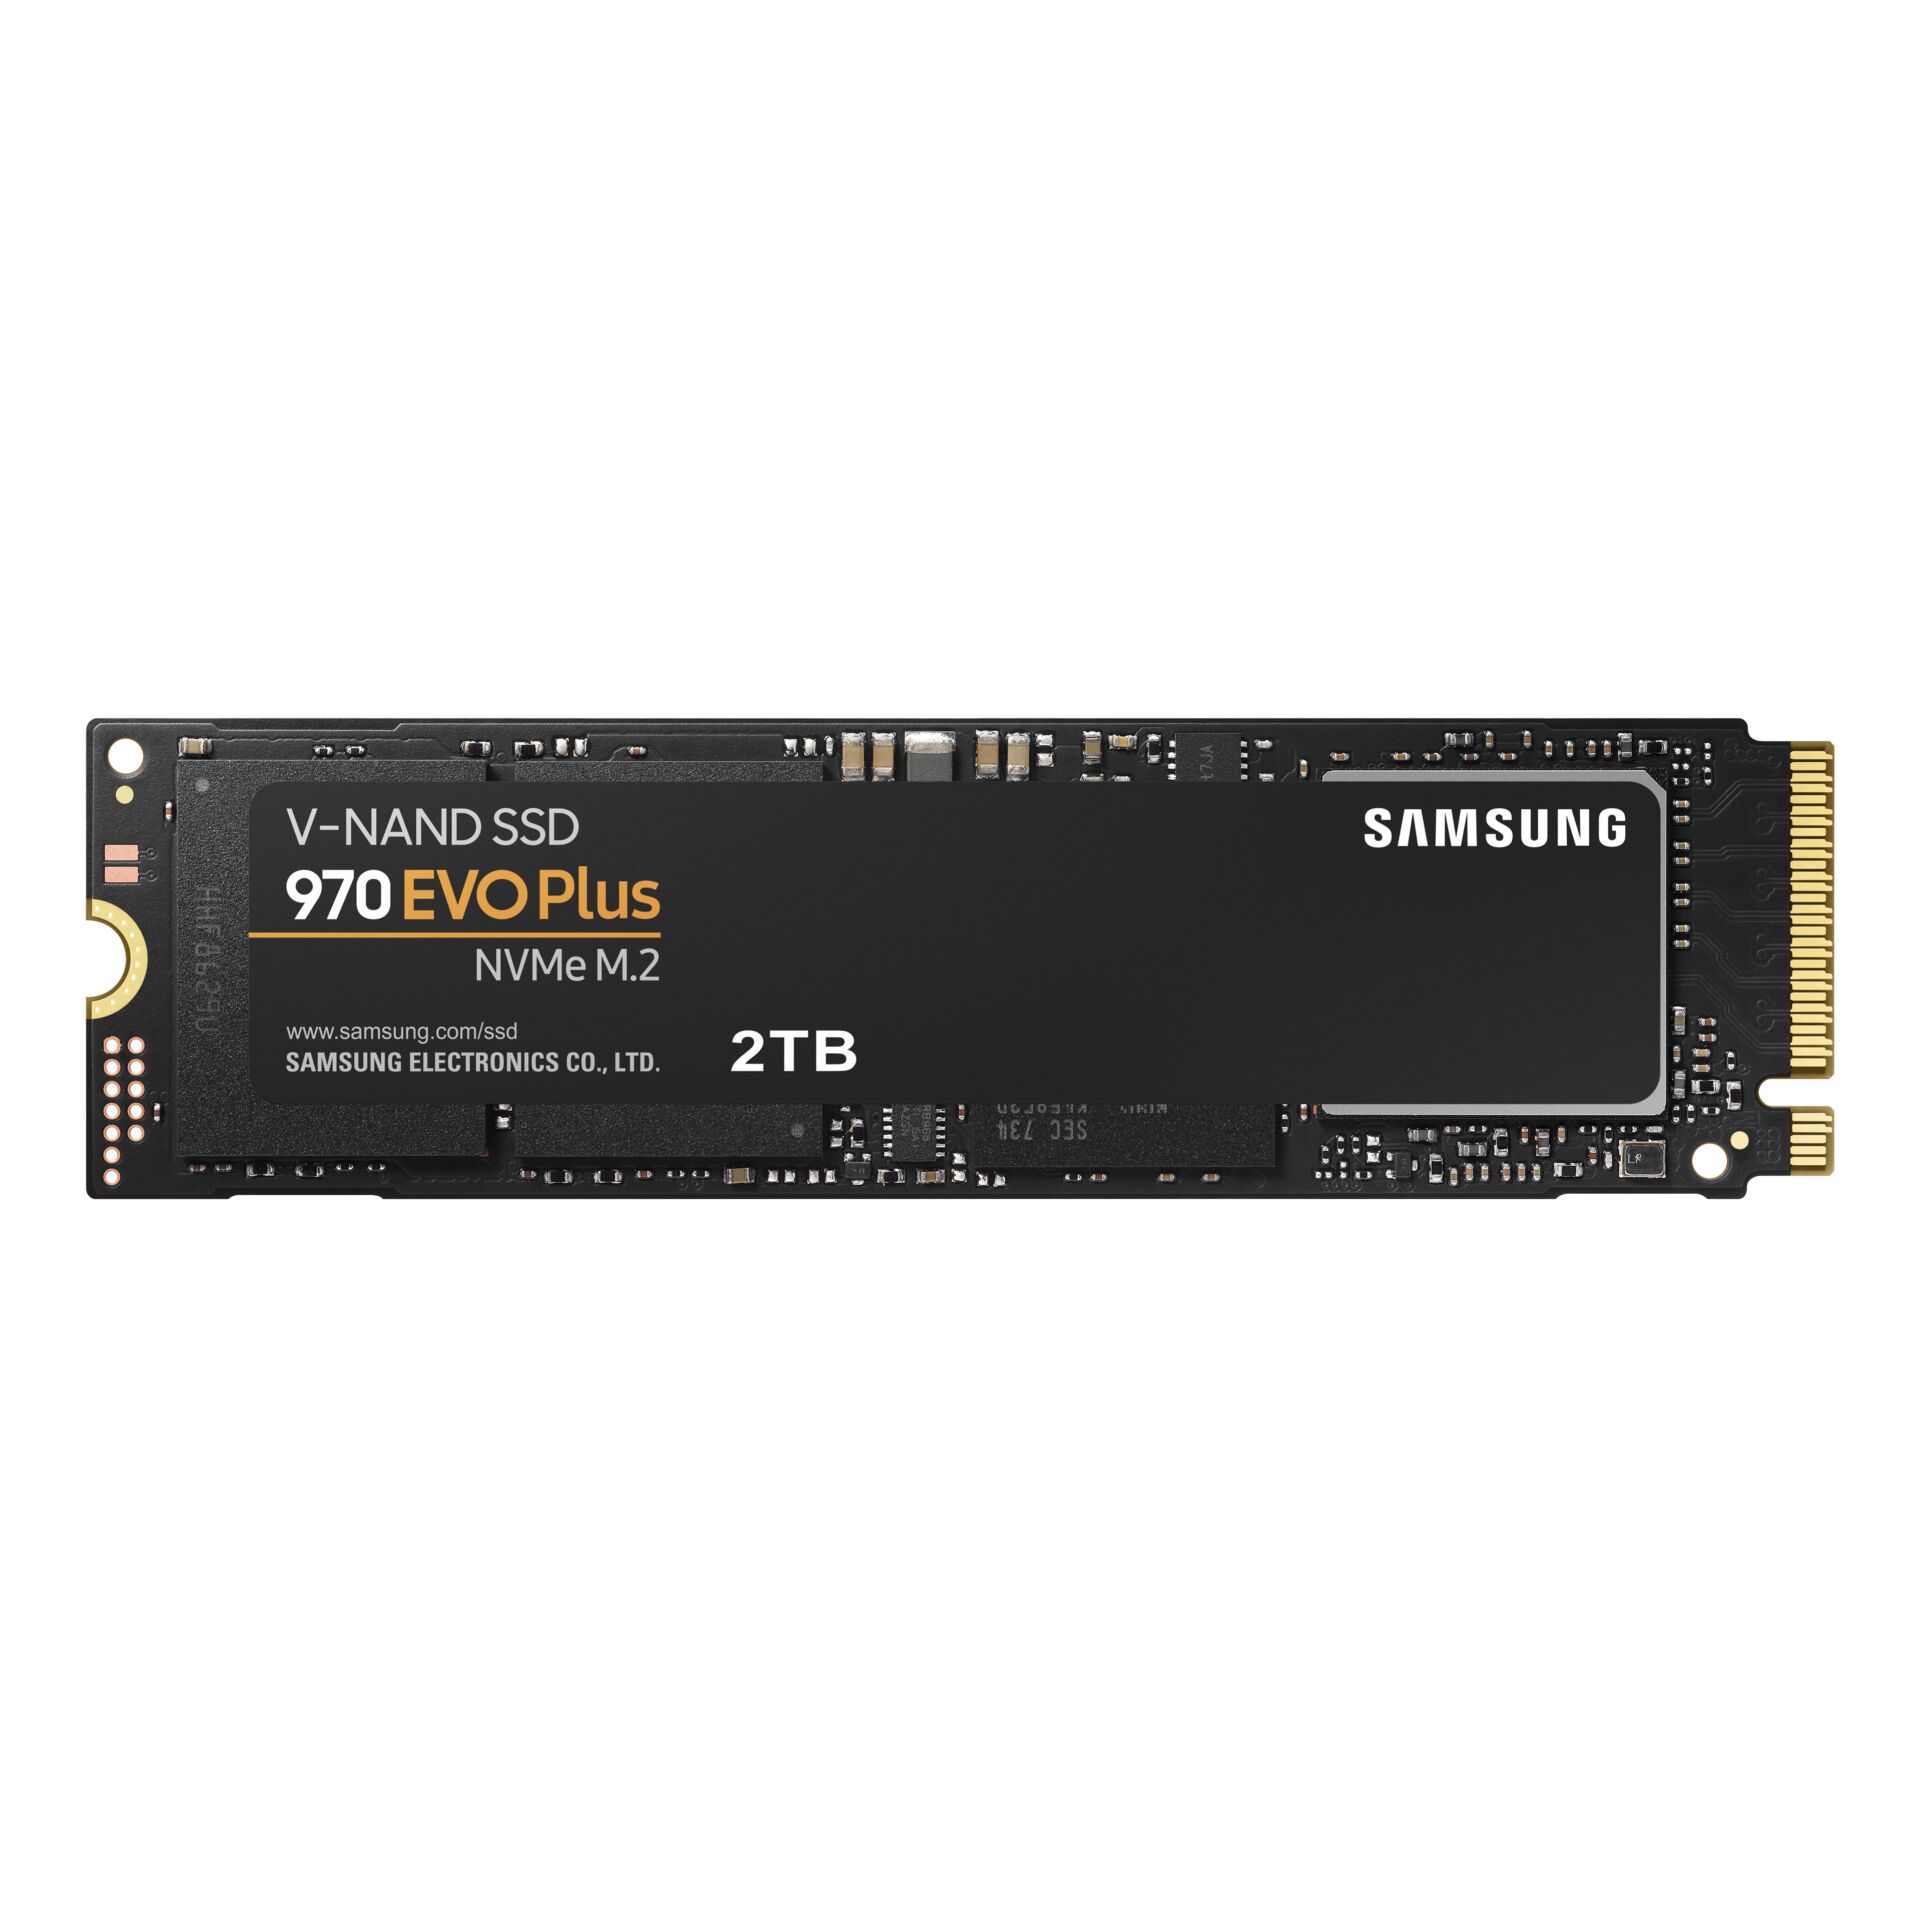 2.0 TB SSD Samsung SSD 970 EVO Plus, M.2/M-Key (PCIe 3.0 x4), lesen: 3500MB/s, schreiben: 3300MB/s